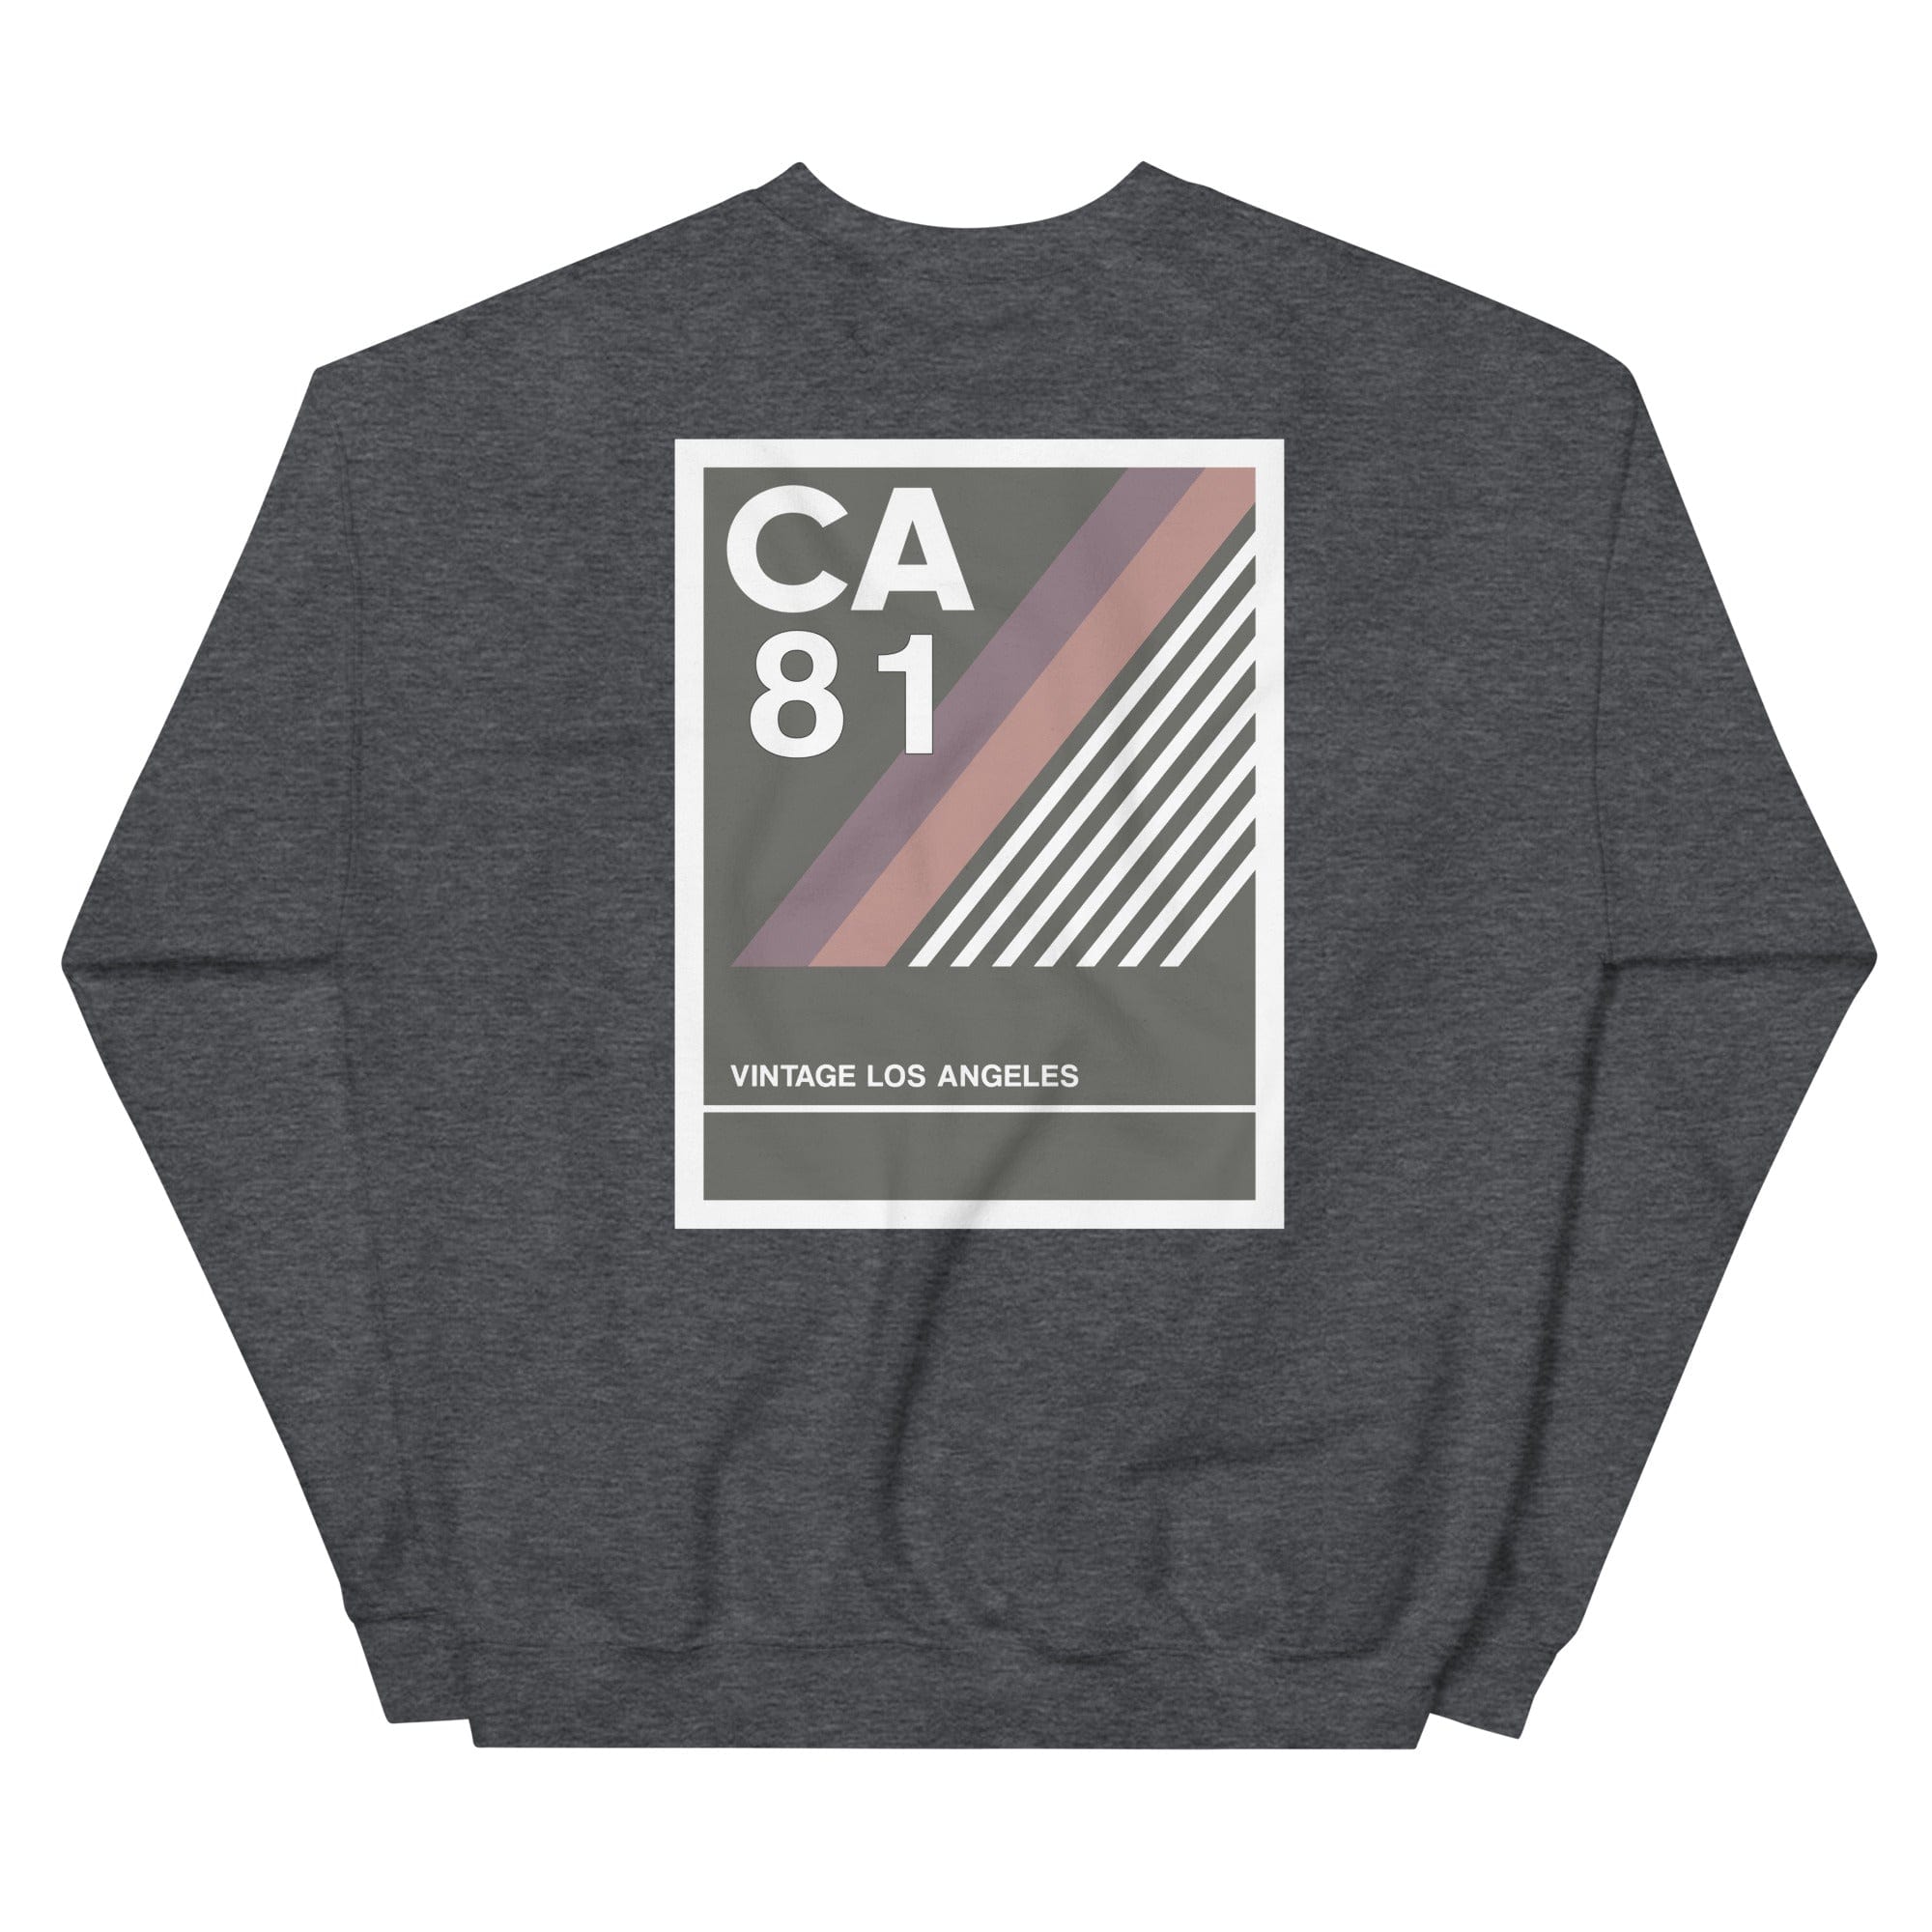 City Shirt Co Vintage Los Angeles Sweatshirt